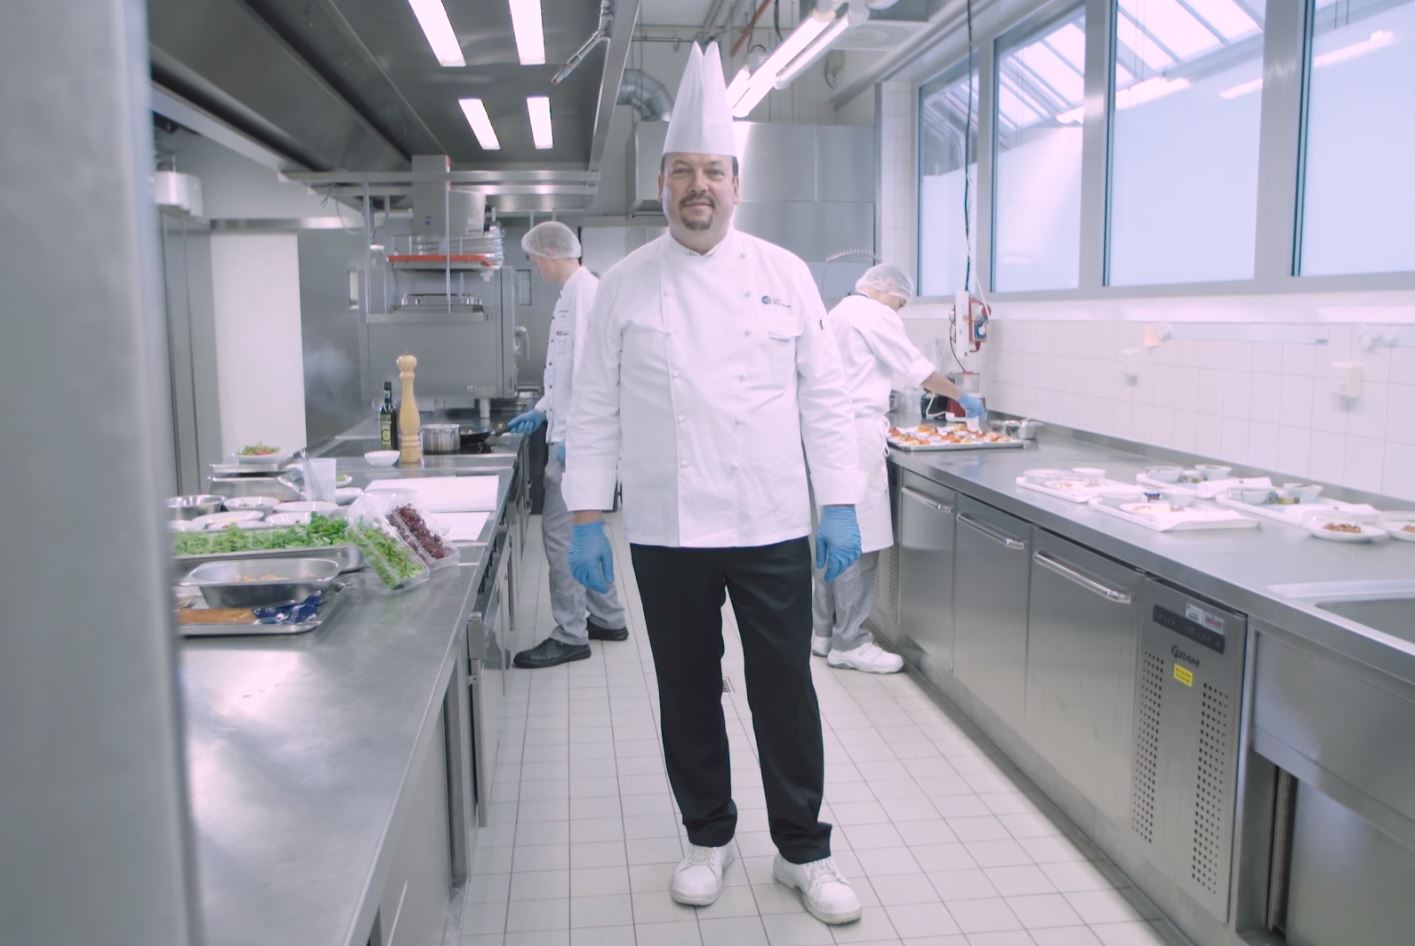 Burkhard, the chef | Lufthansa